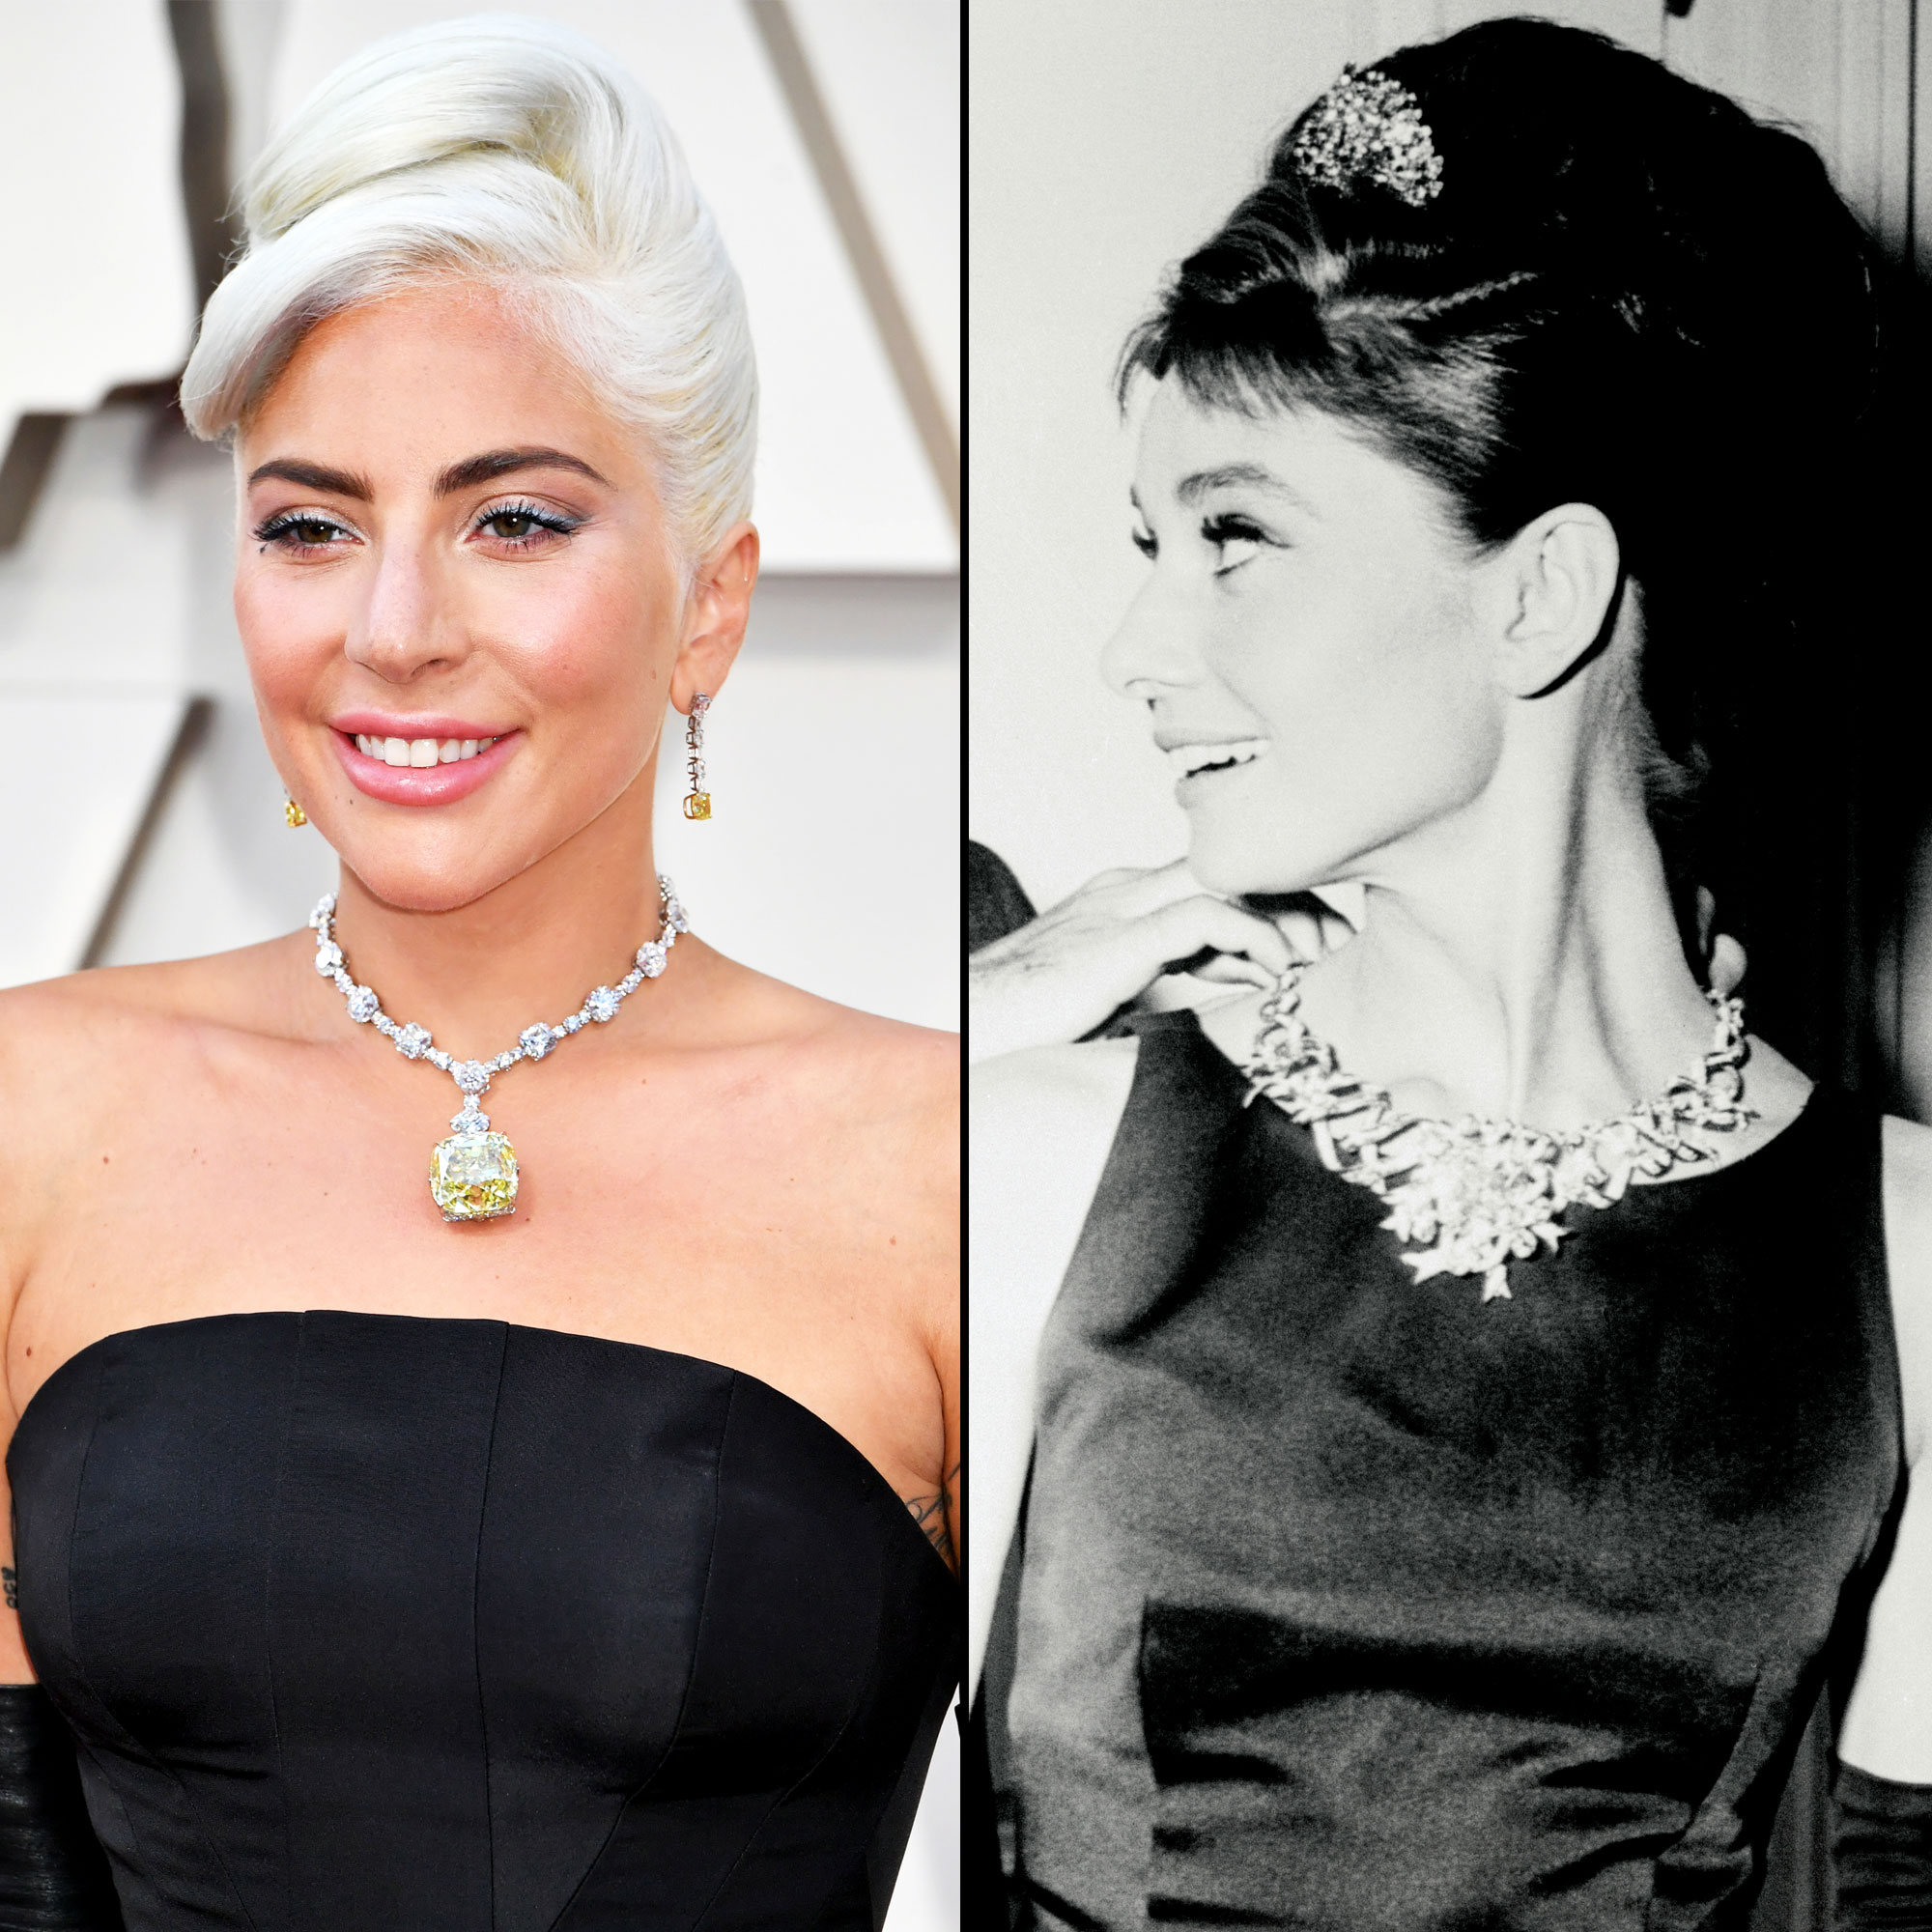 Oscars 2019 Red Carpet: Lady Gaga's 